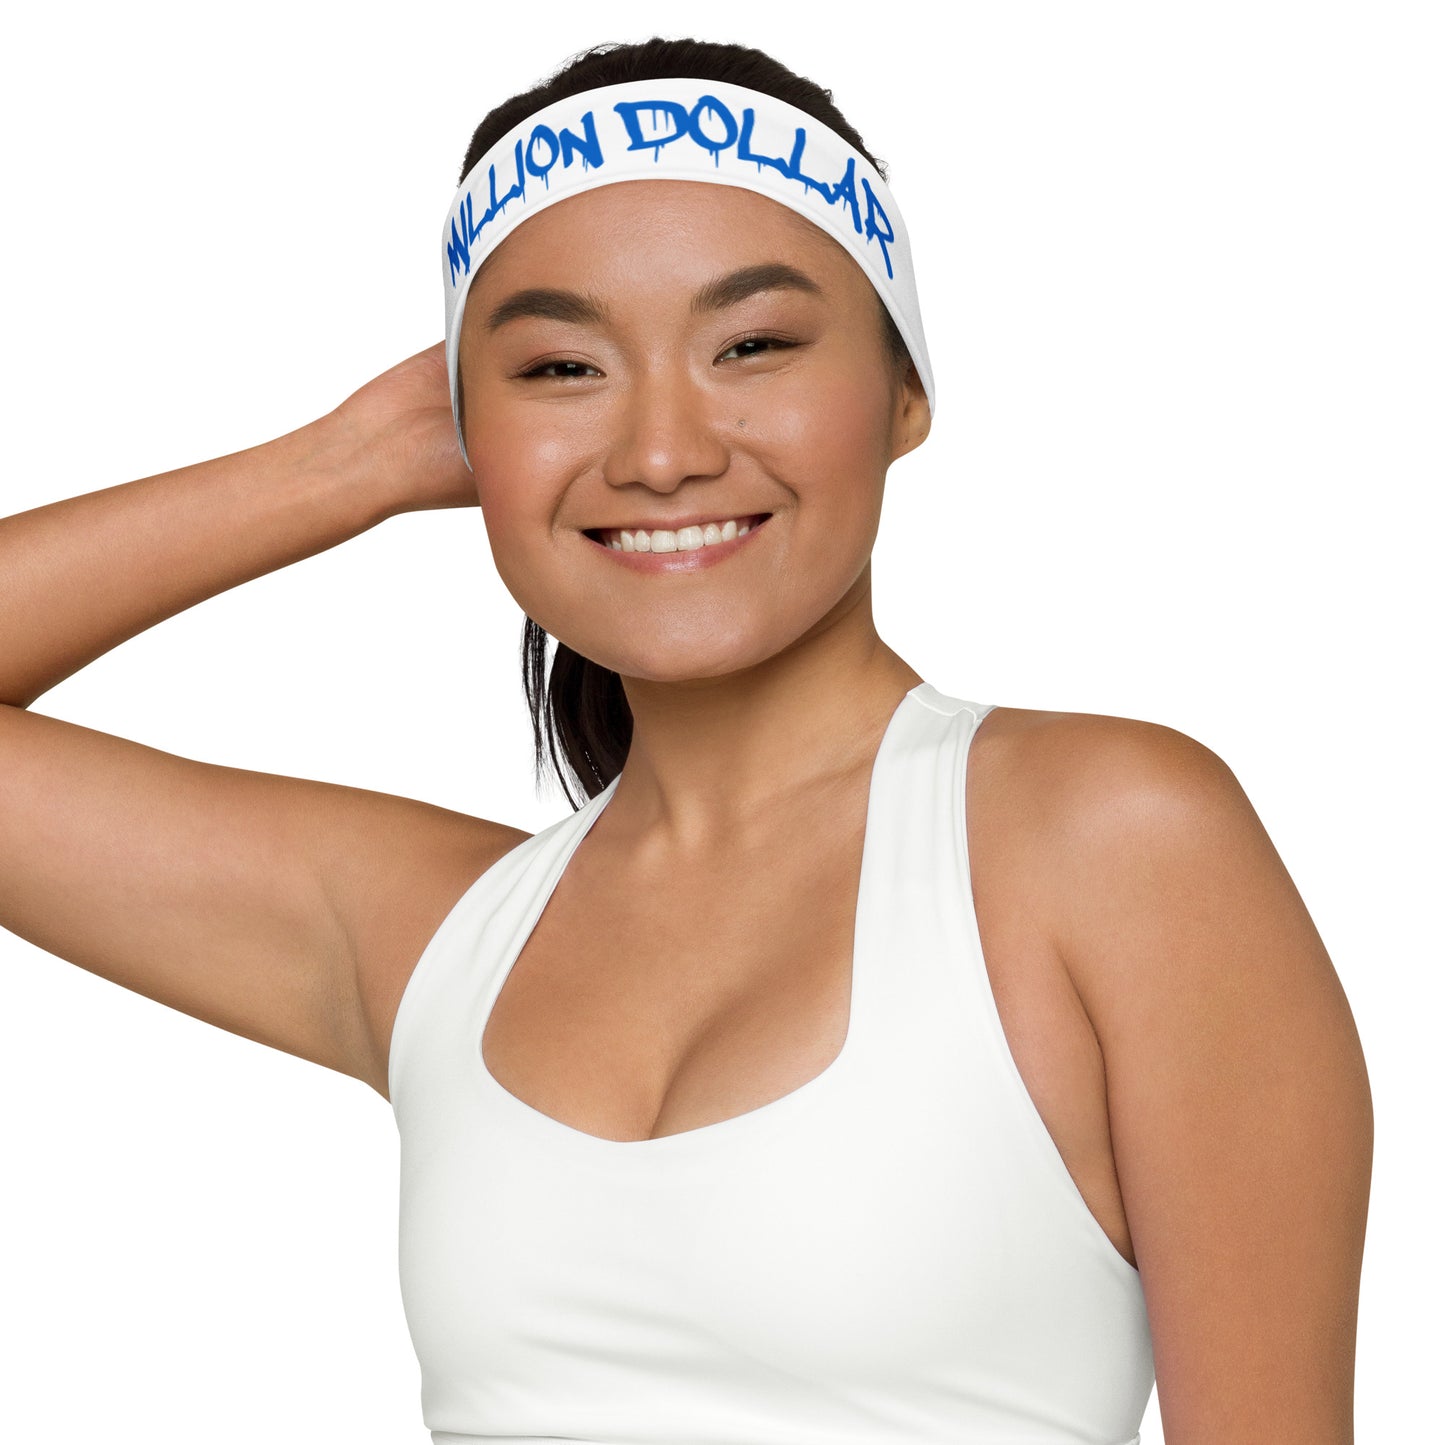 Blue MDV Sports Headband